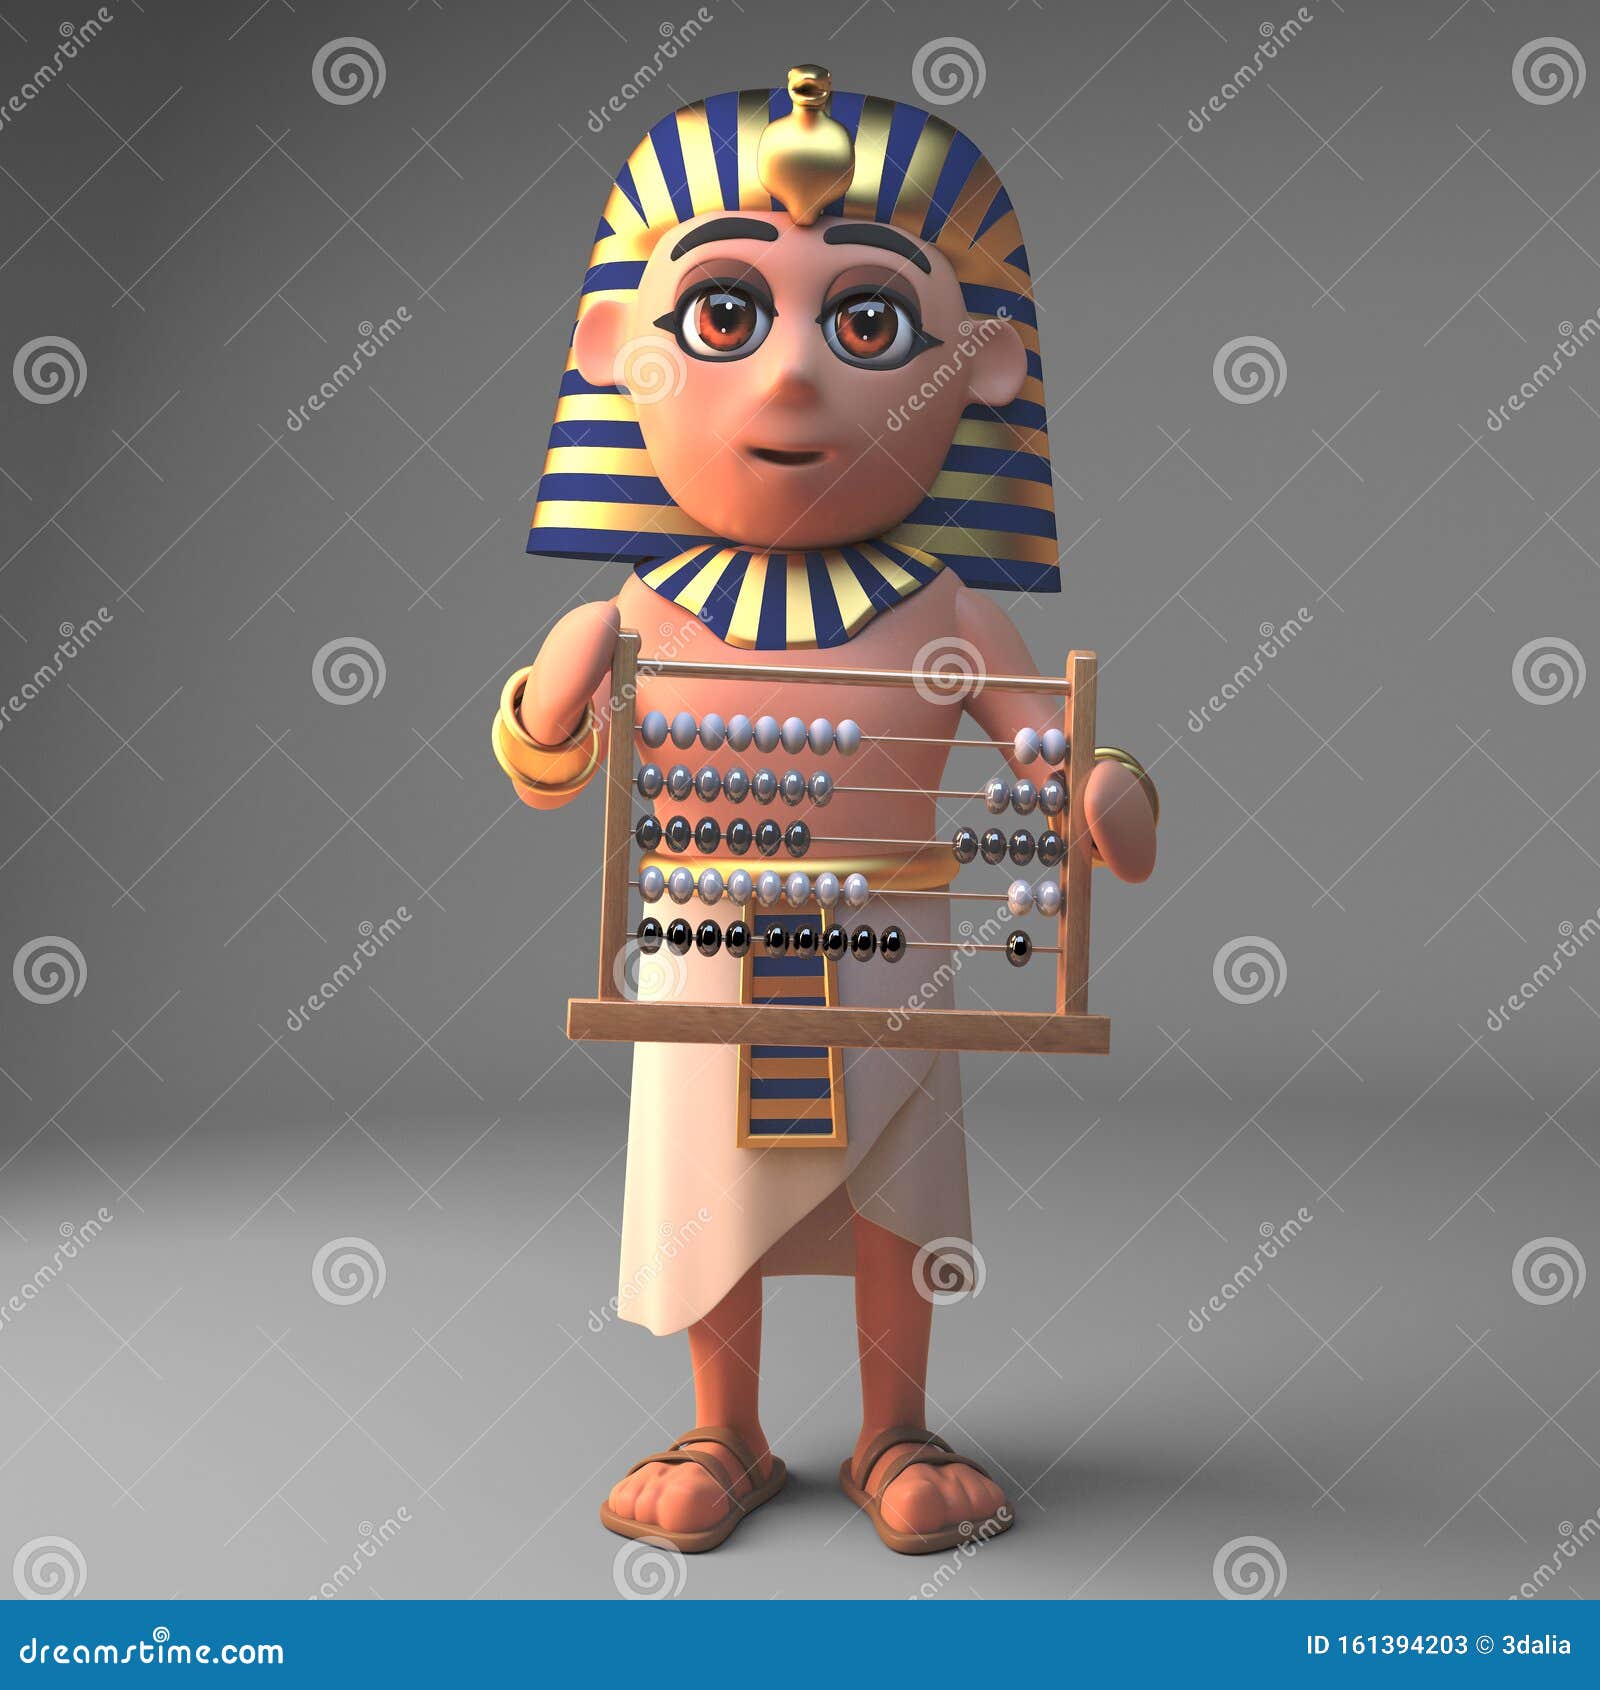 3d Cartoon Tutankhamun Pharaoh Character Holding an Abacus, 3d Illustration  Stock Illustration - Illustration of concept, ancient: 161394203